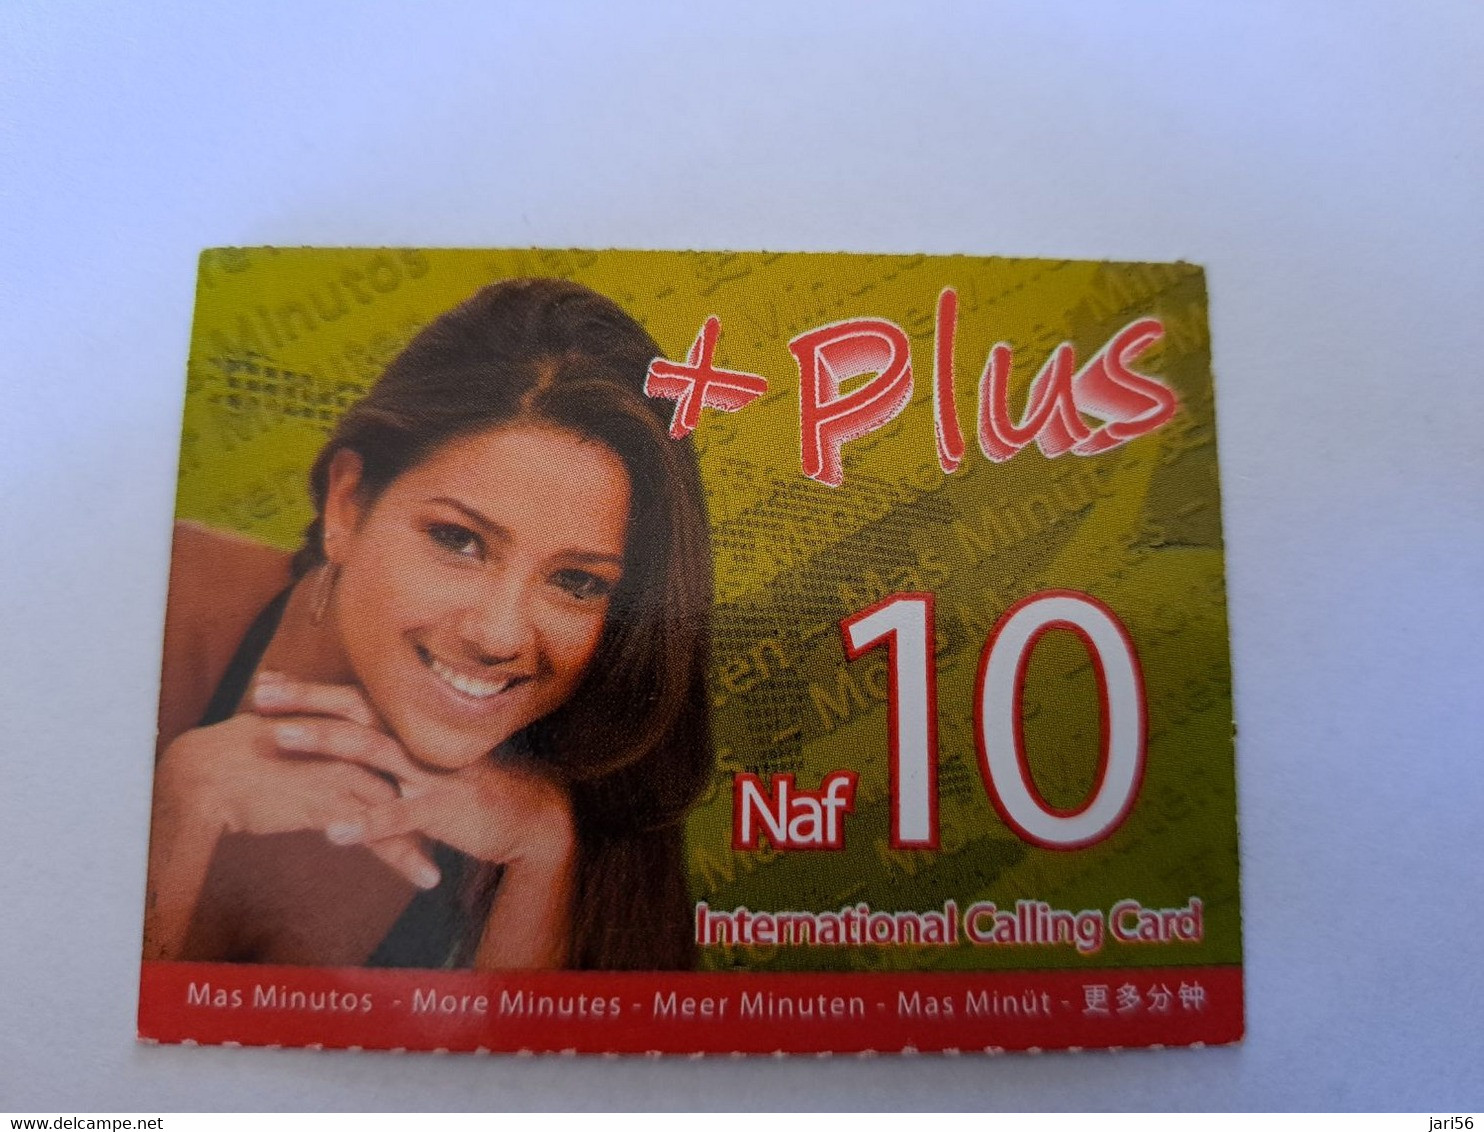 CURACAO  DIGICEL FLEX CARD  NAF 10 ,-  LADY     VERY FINE USED CARD        ** 12088** - Antille (Olandesi)